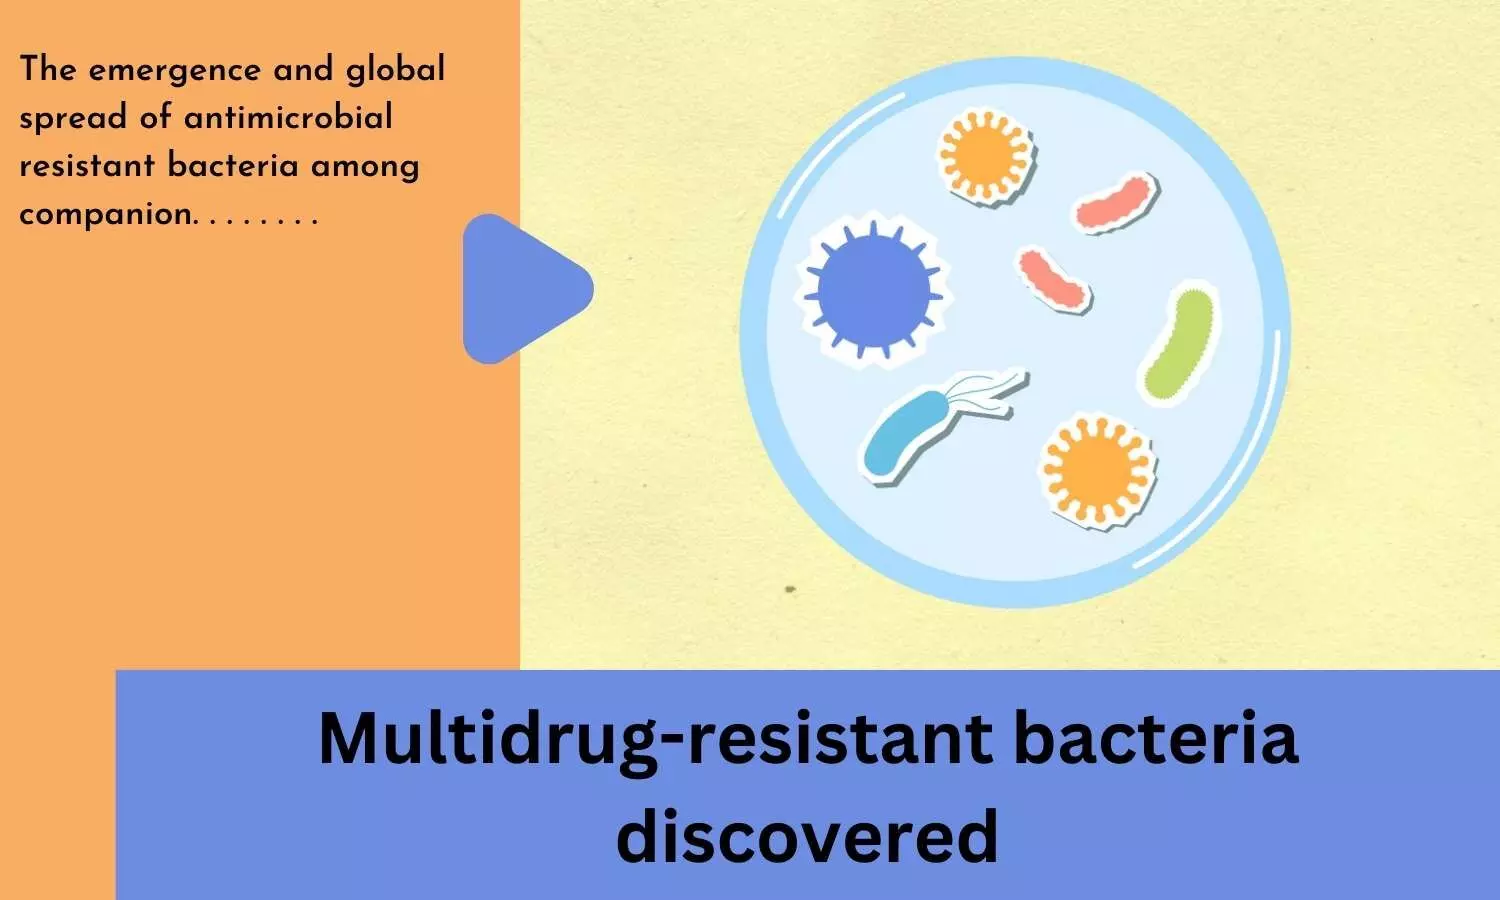 Multidrug-resistant bacteria discovered